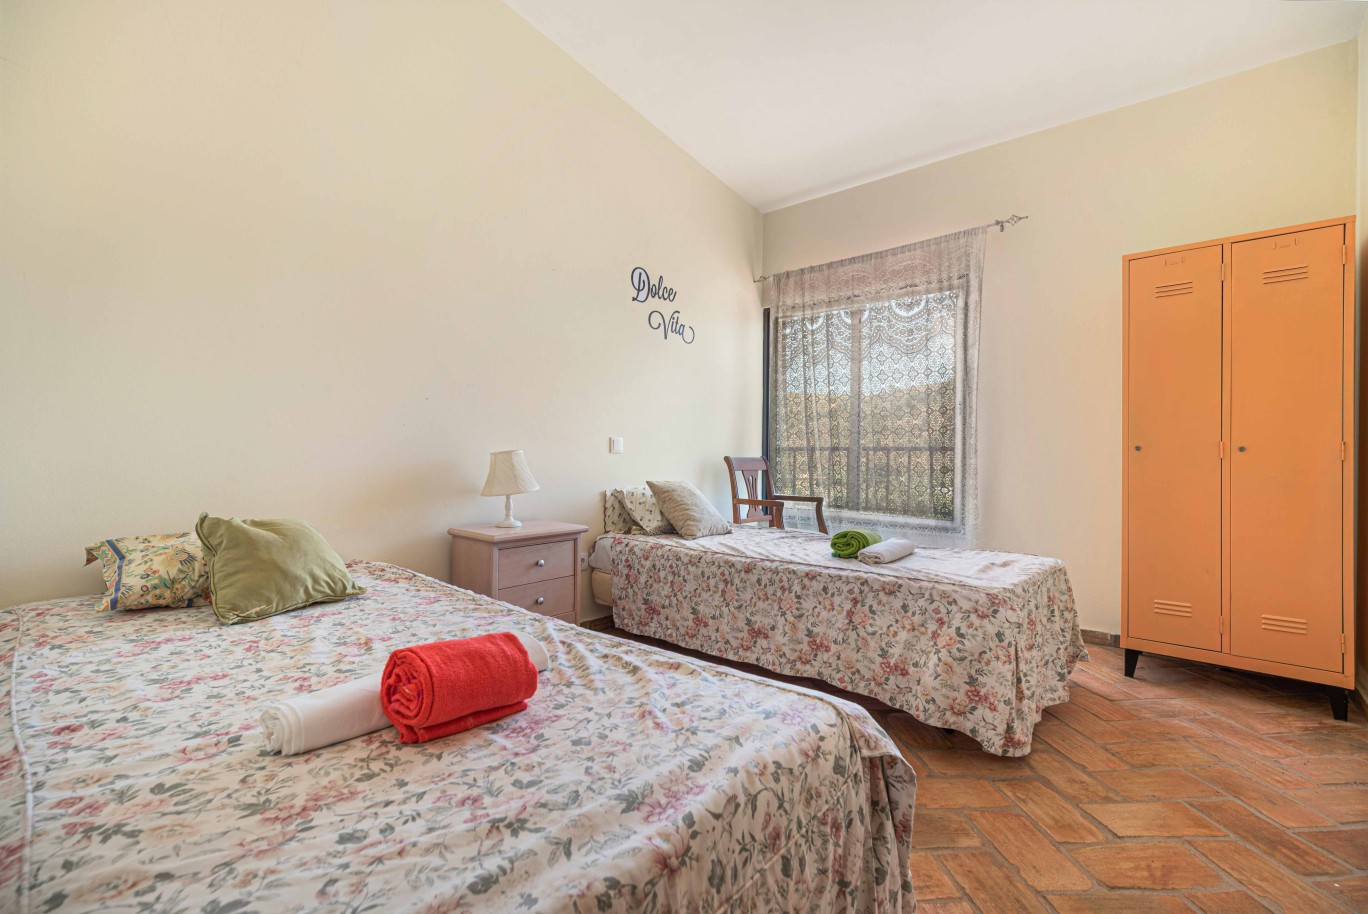 9 bedroom villa for sale in Pereira, Algarve_231602